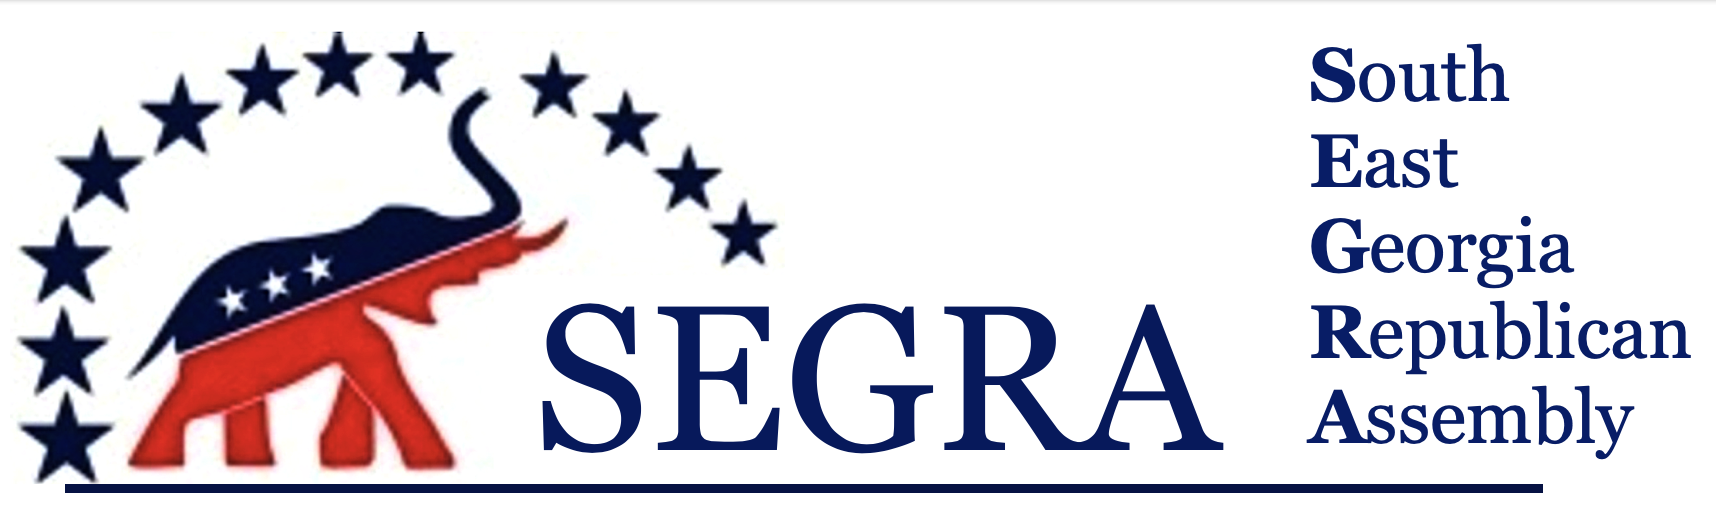 SEGRA Logo